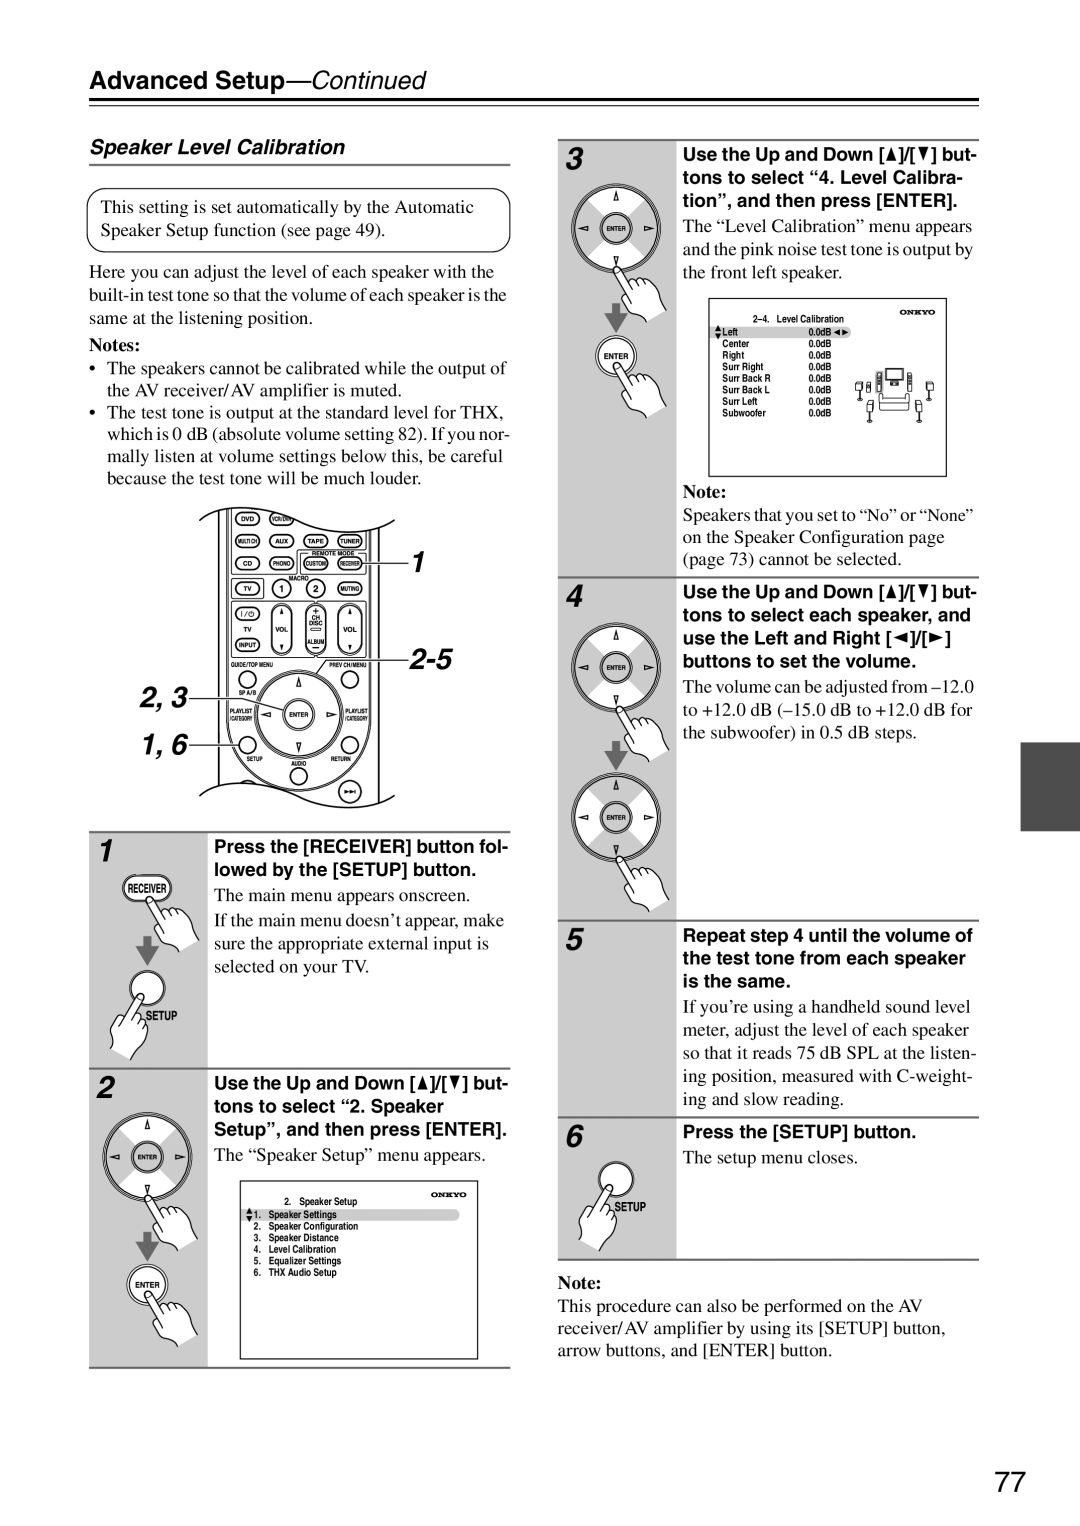 Onkyo TX-SA706 instruction manual 1 2-52, 31, Speaker Level Calibration, Advanced Setup—Continued, Notes 